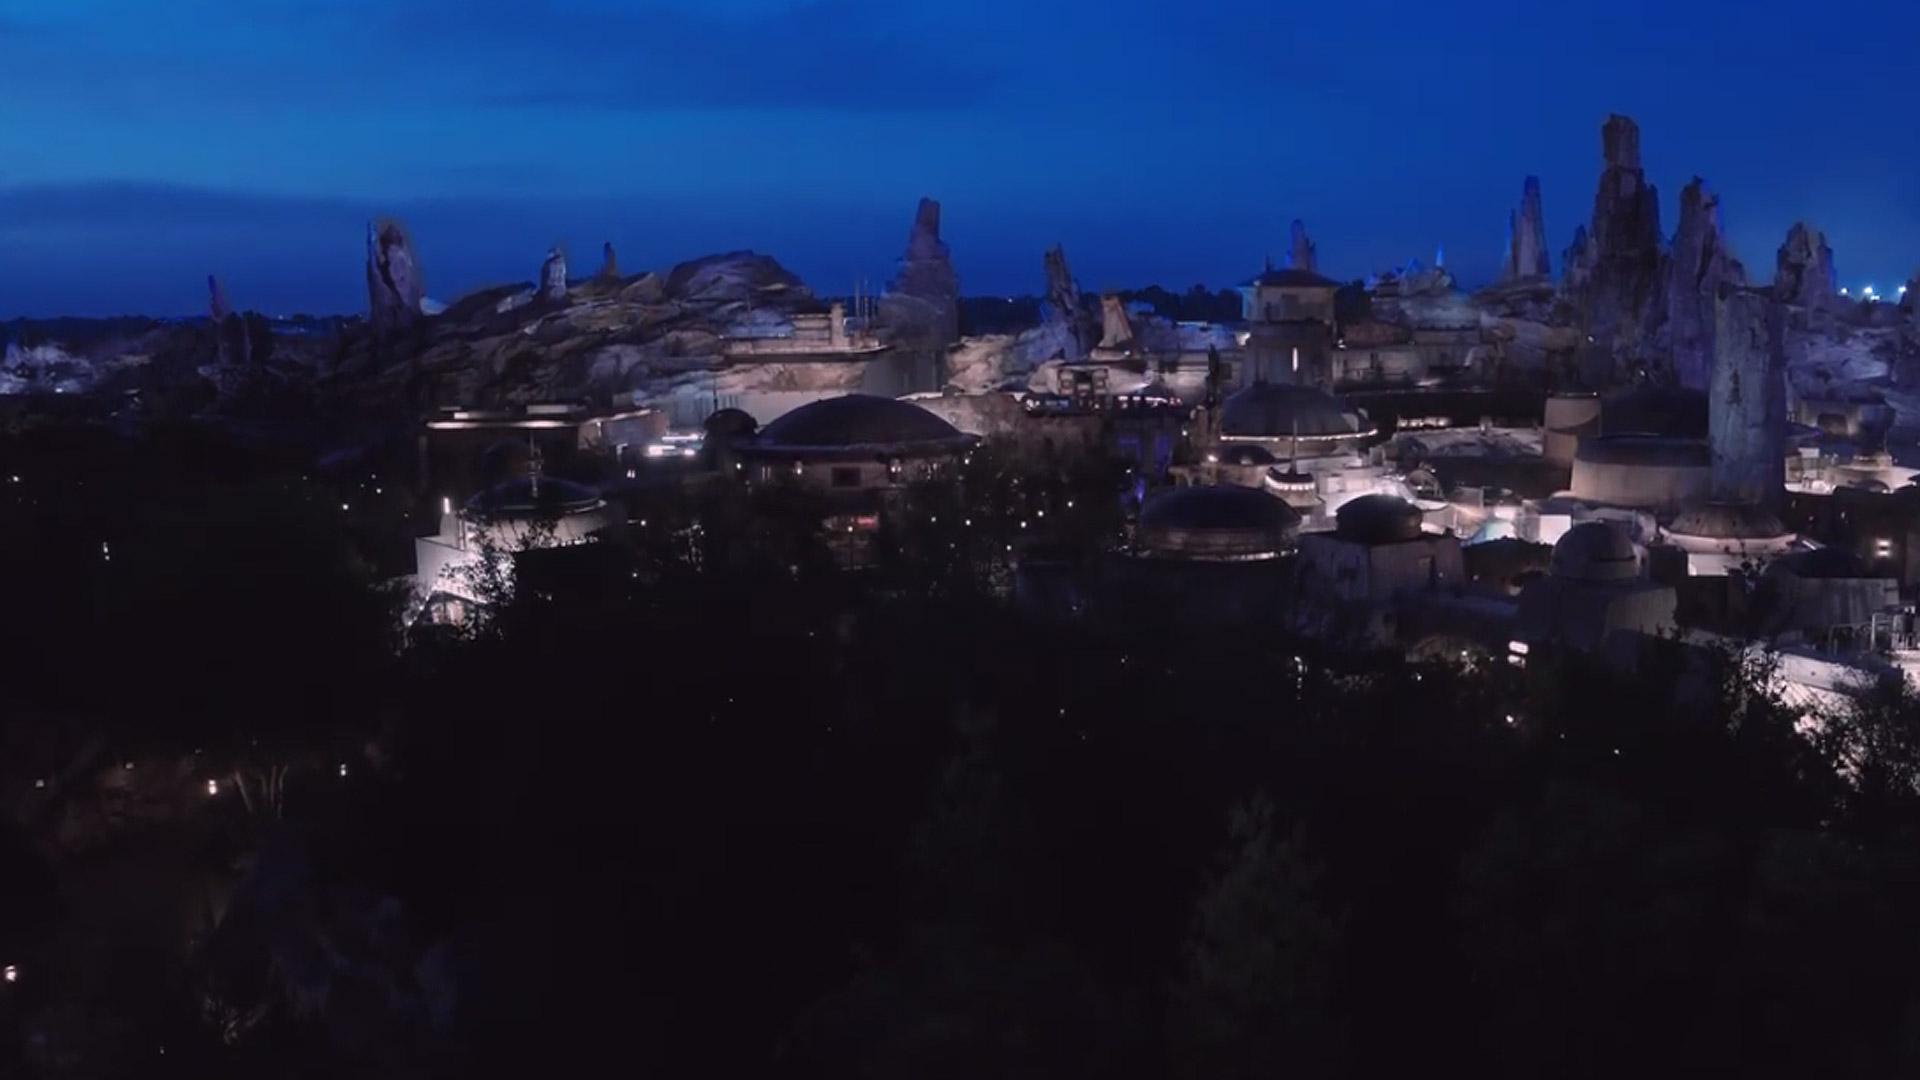 New video shows off Star Wars: Galaxy's Edge at Disney World